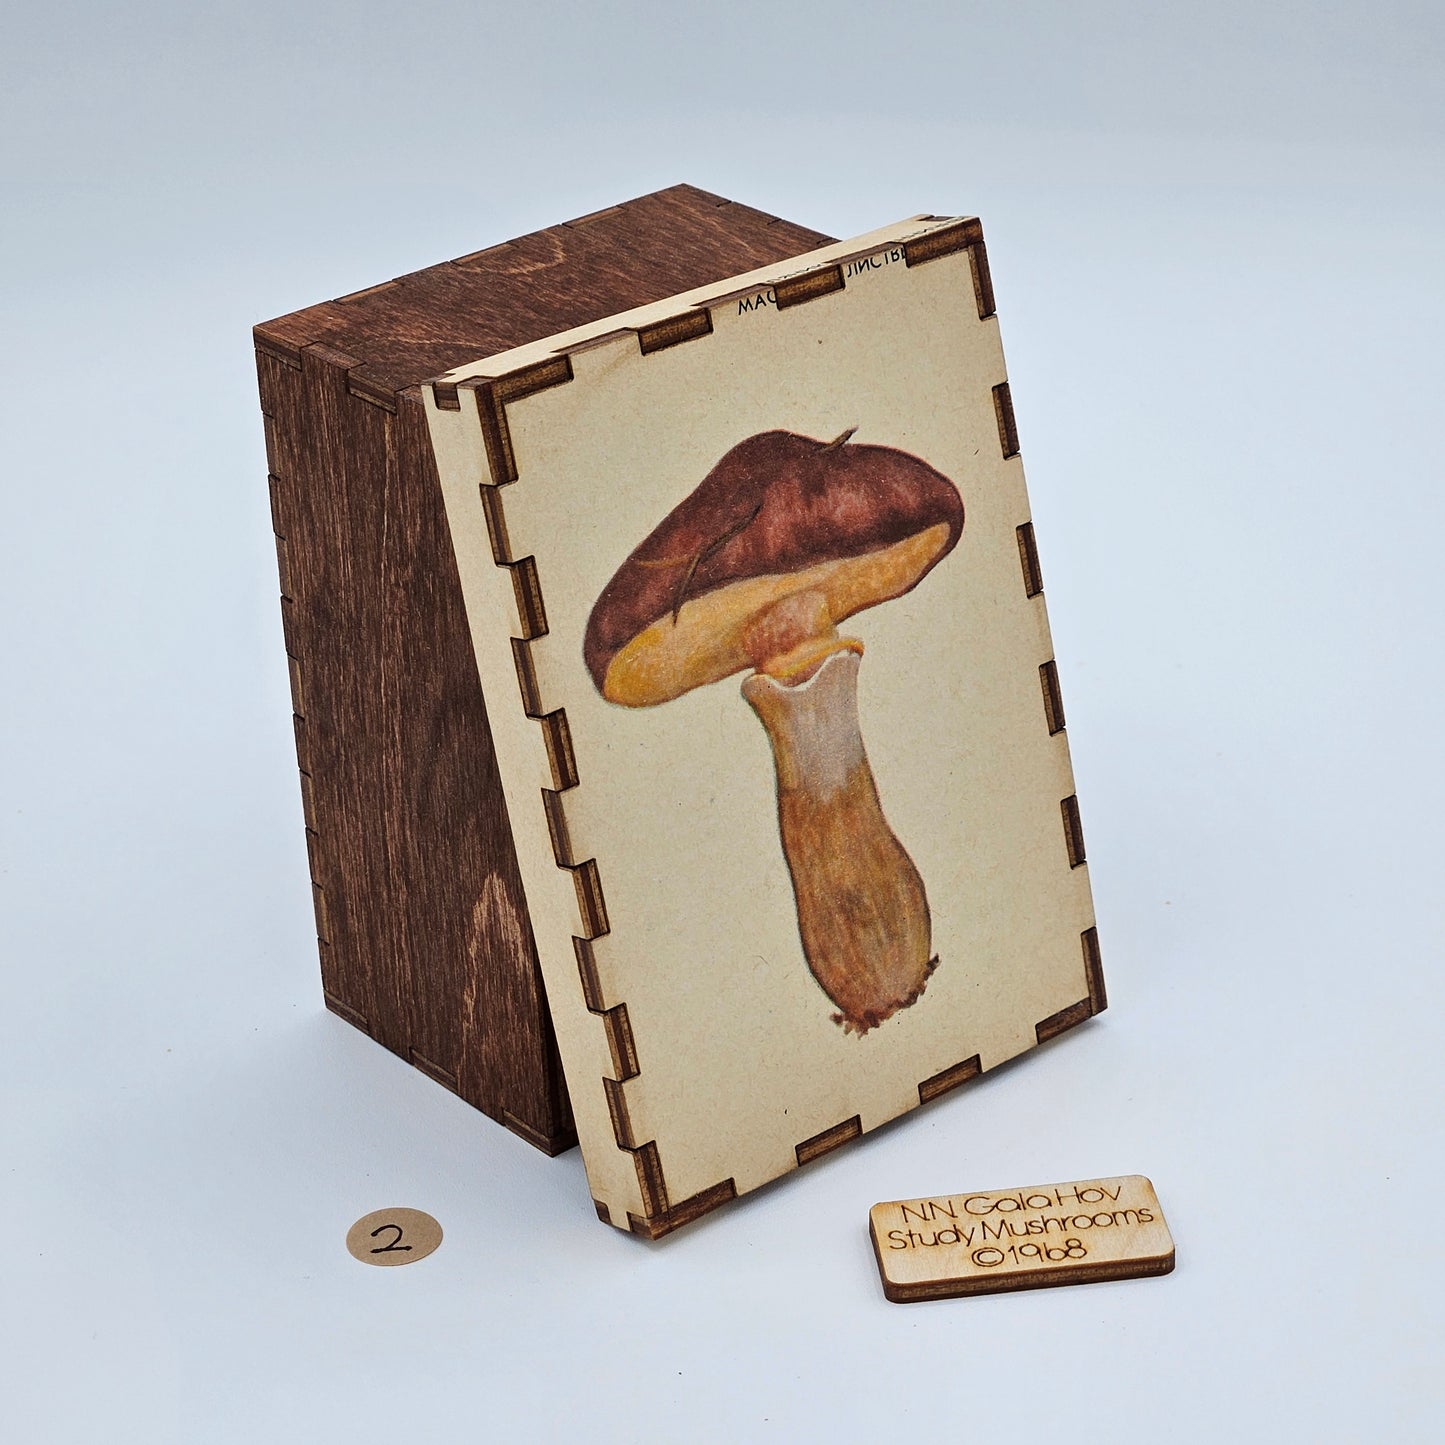 1968 "Study Mushrooms" Story Boxes